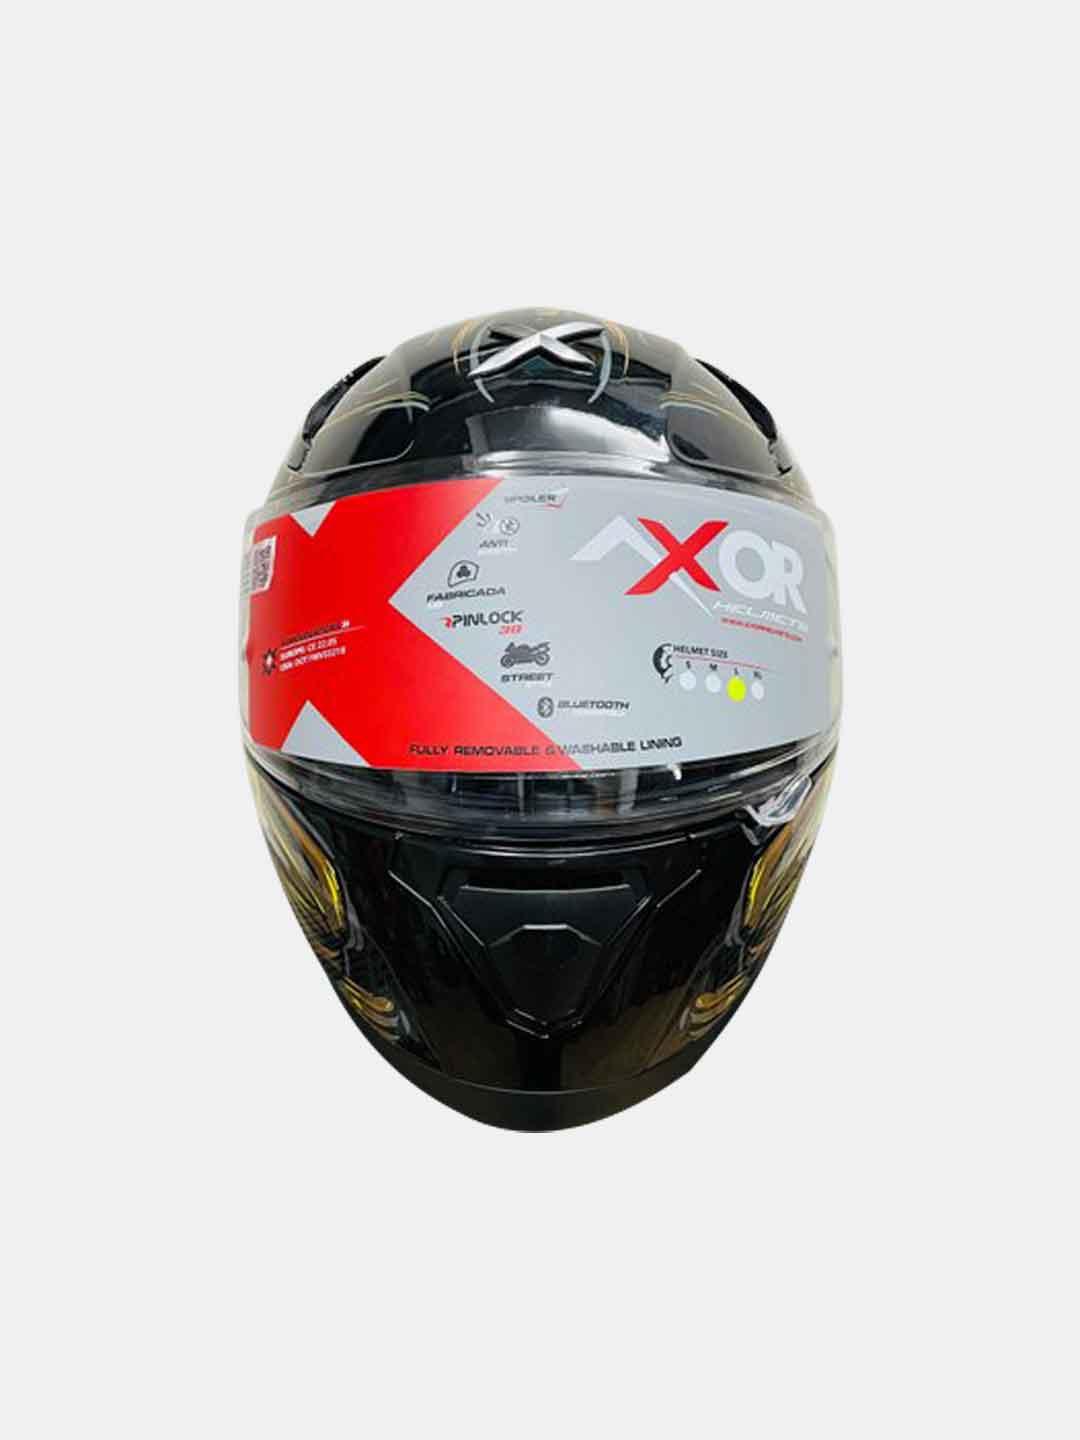 Axor Apex Seadevil Glossy Black Gold Helmet - Moto Modz